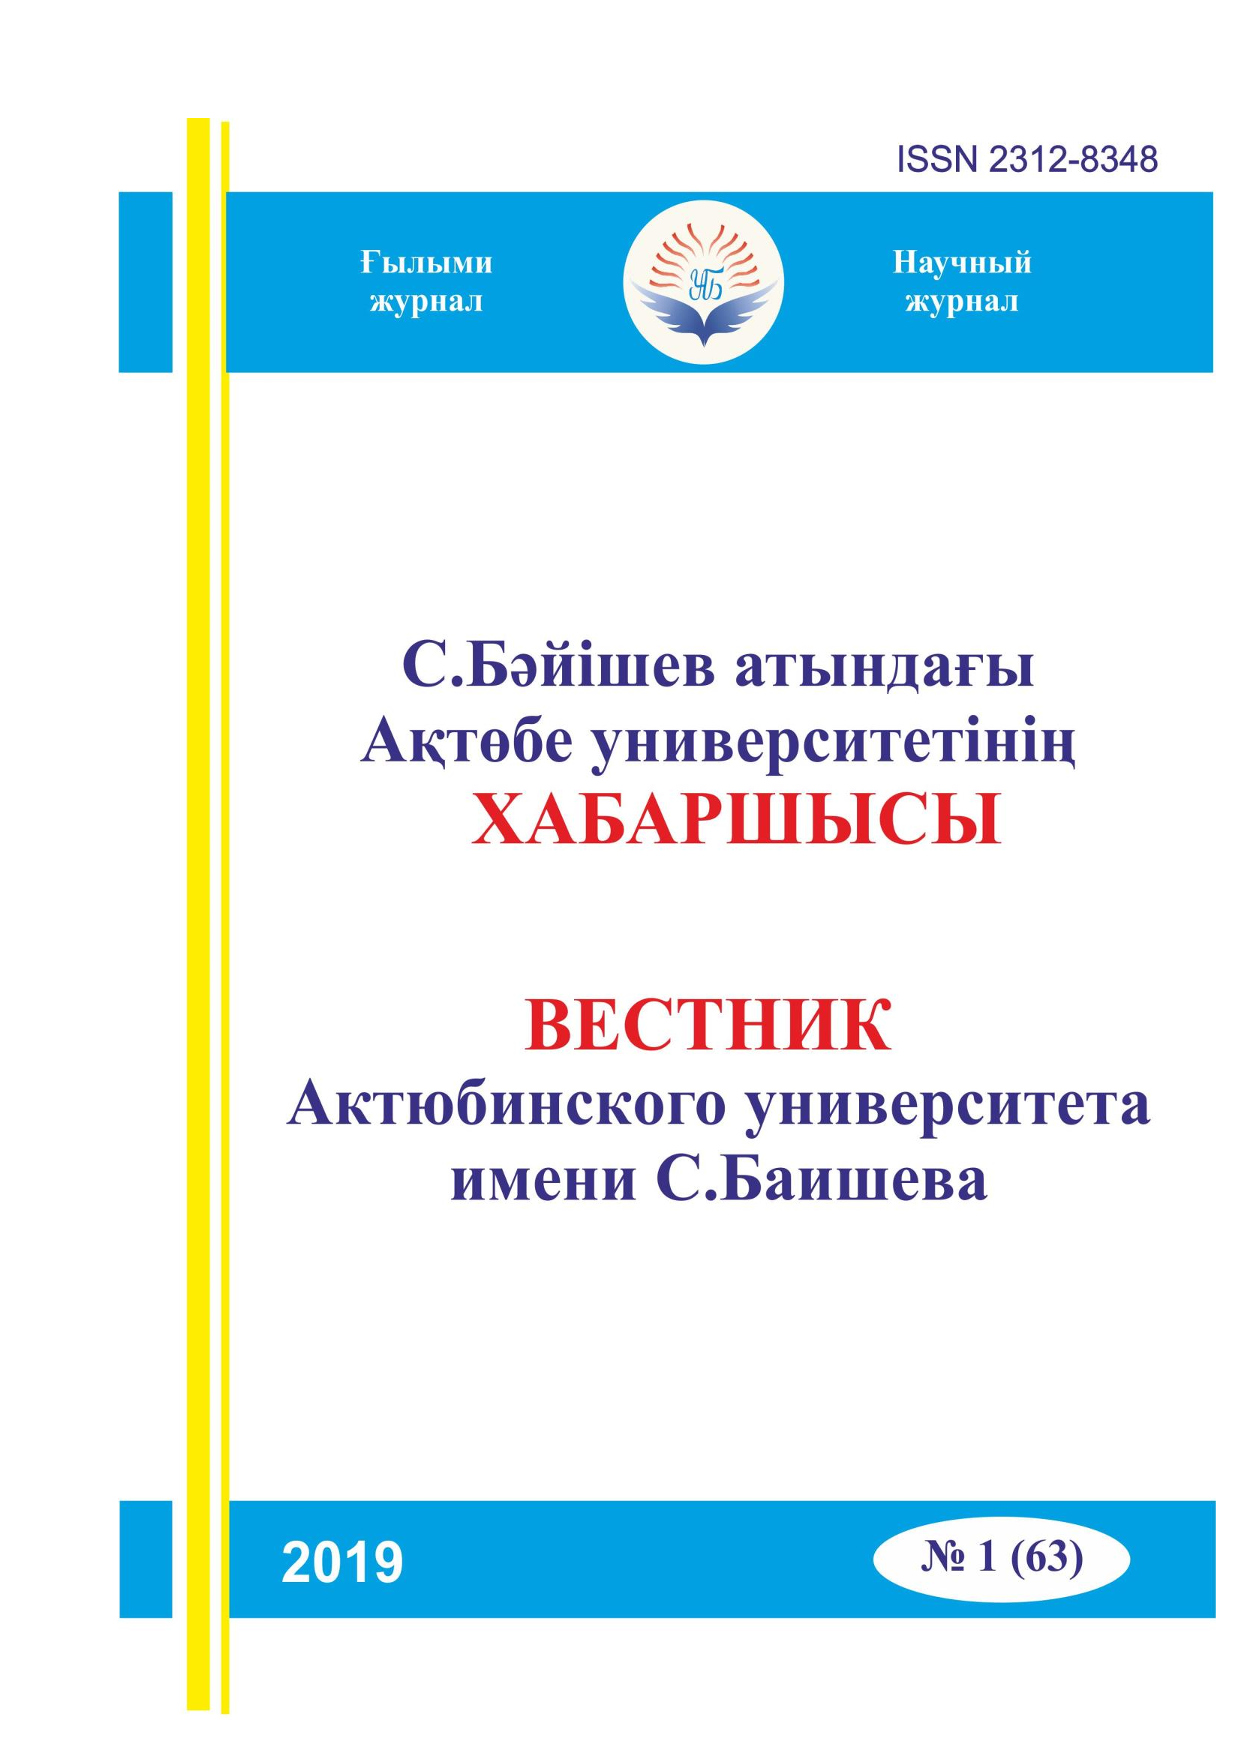 Вестник Актюбинского университета им. С.Баишева №1(63) 2019г